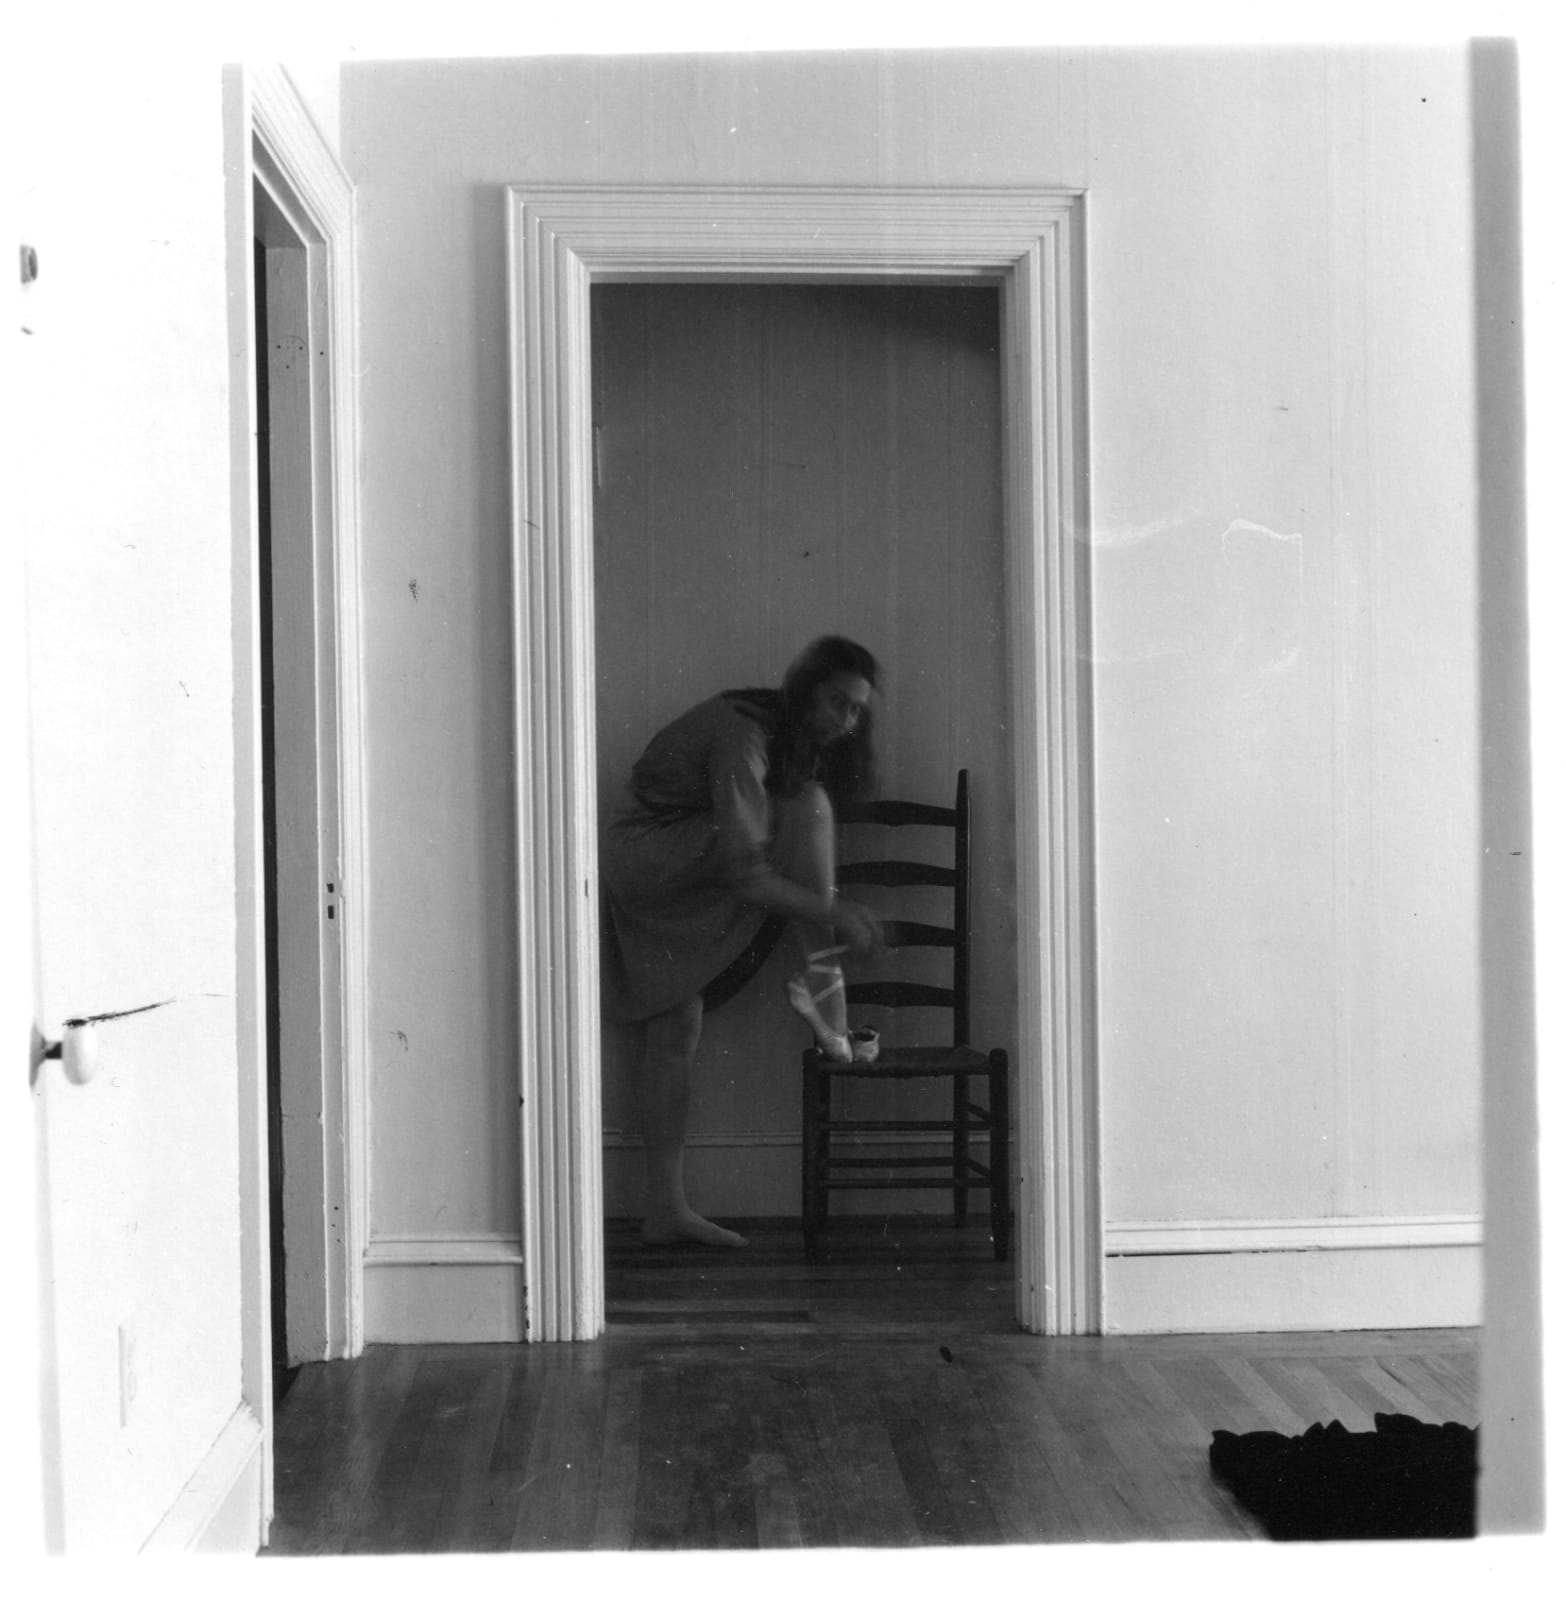 Francesca Woodman, Untitled (Sloan Rankin and Ballet Slipper), Meeting Street, Providence, Rhode Island, 1977